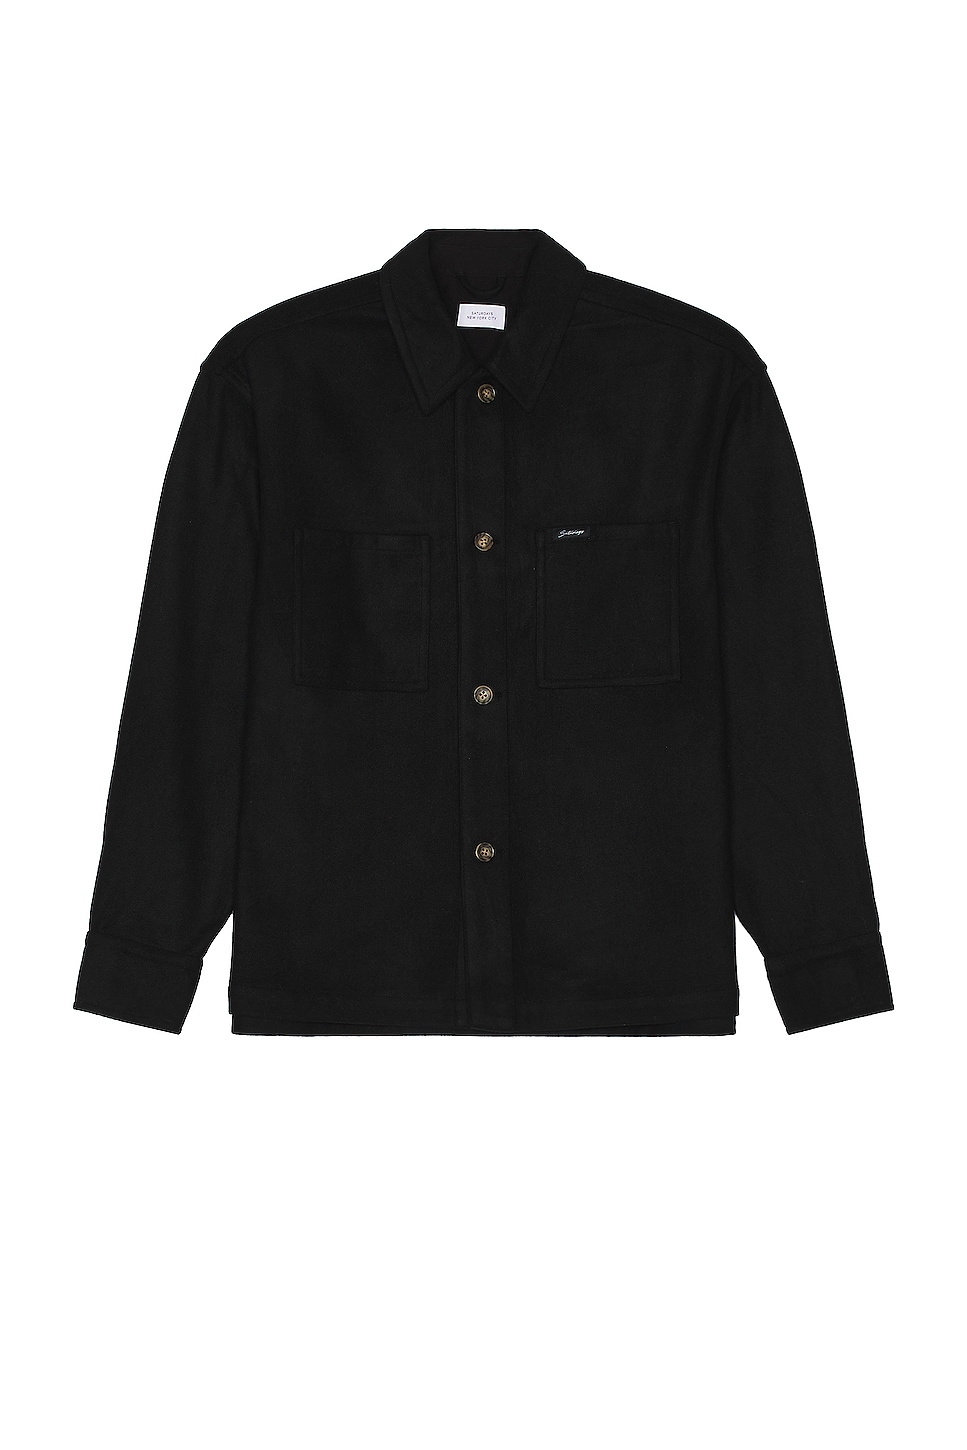 Рубашка SATURDAYS NYC Driessen Wool Overshirt, черный цена и фото